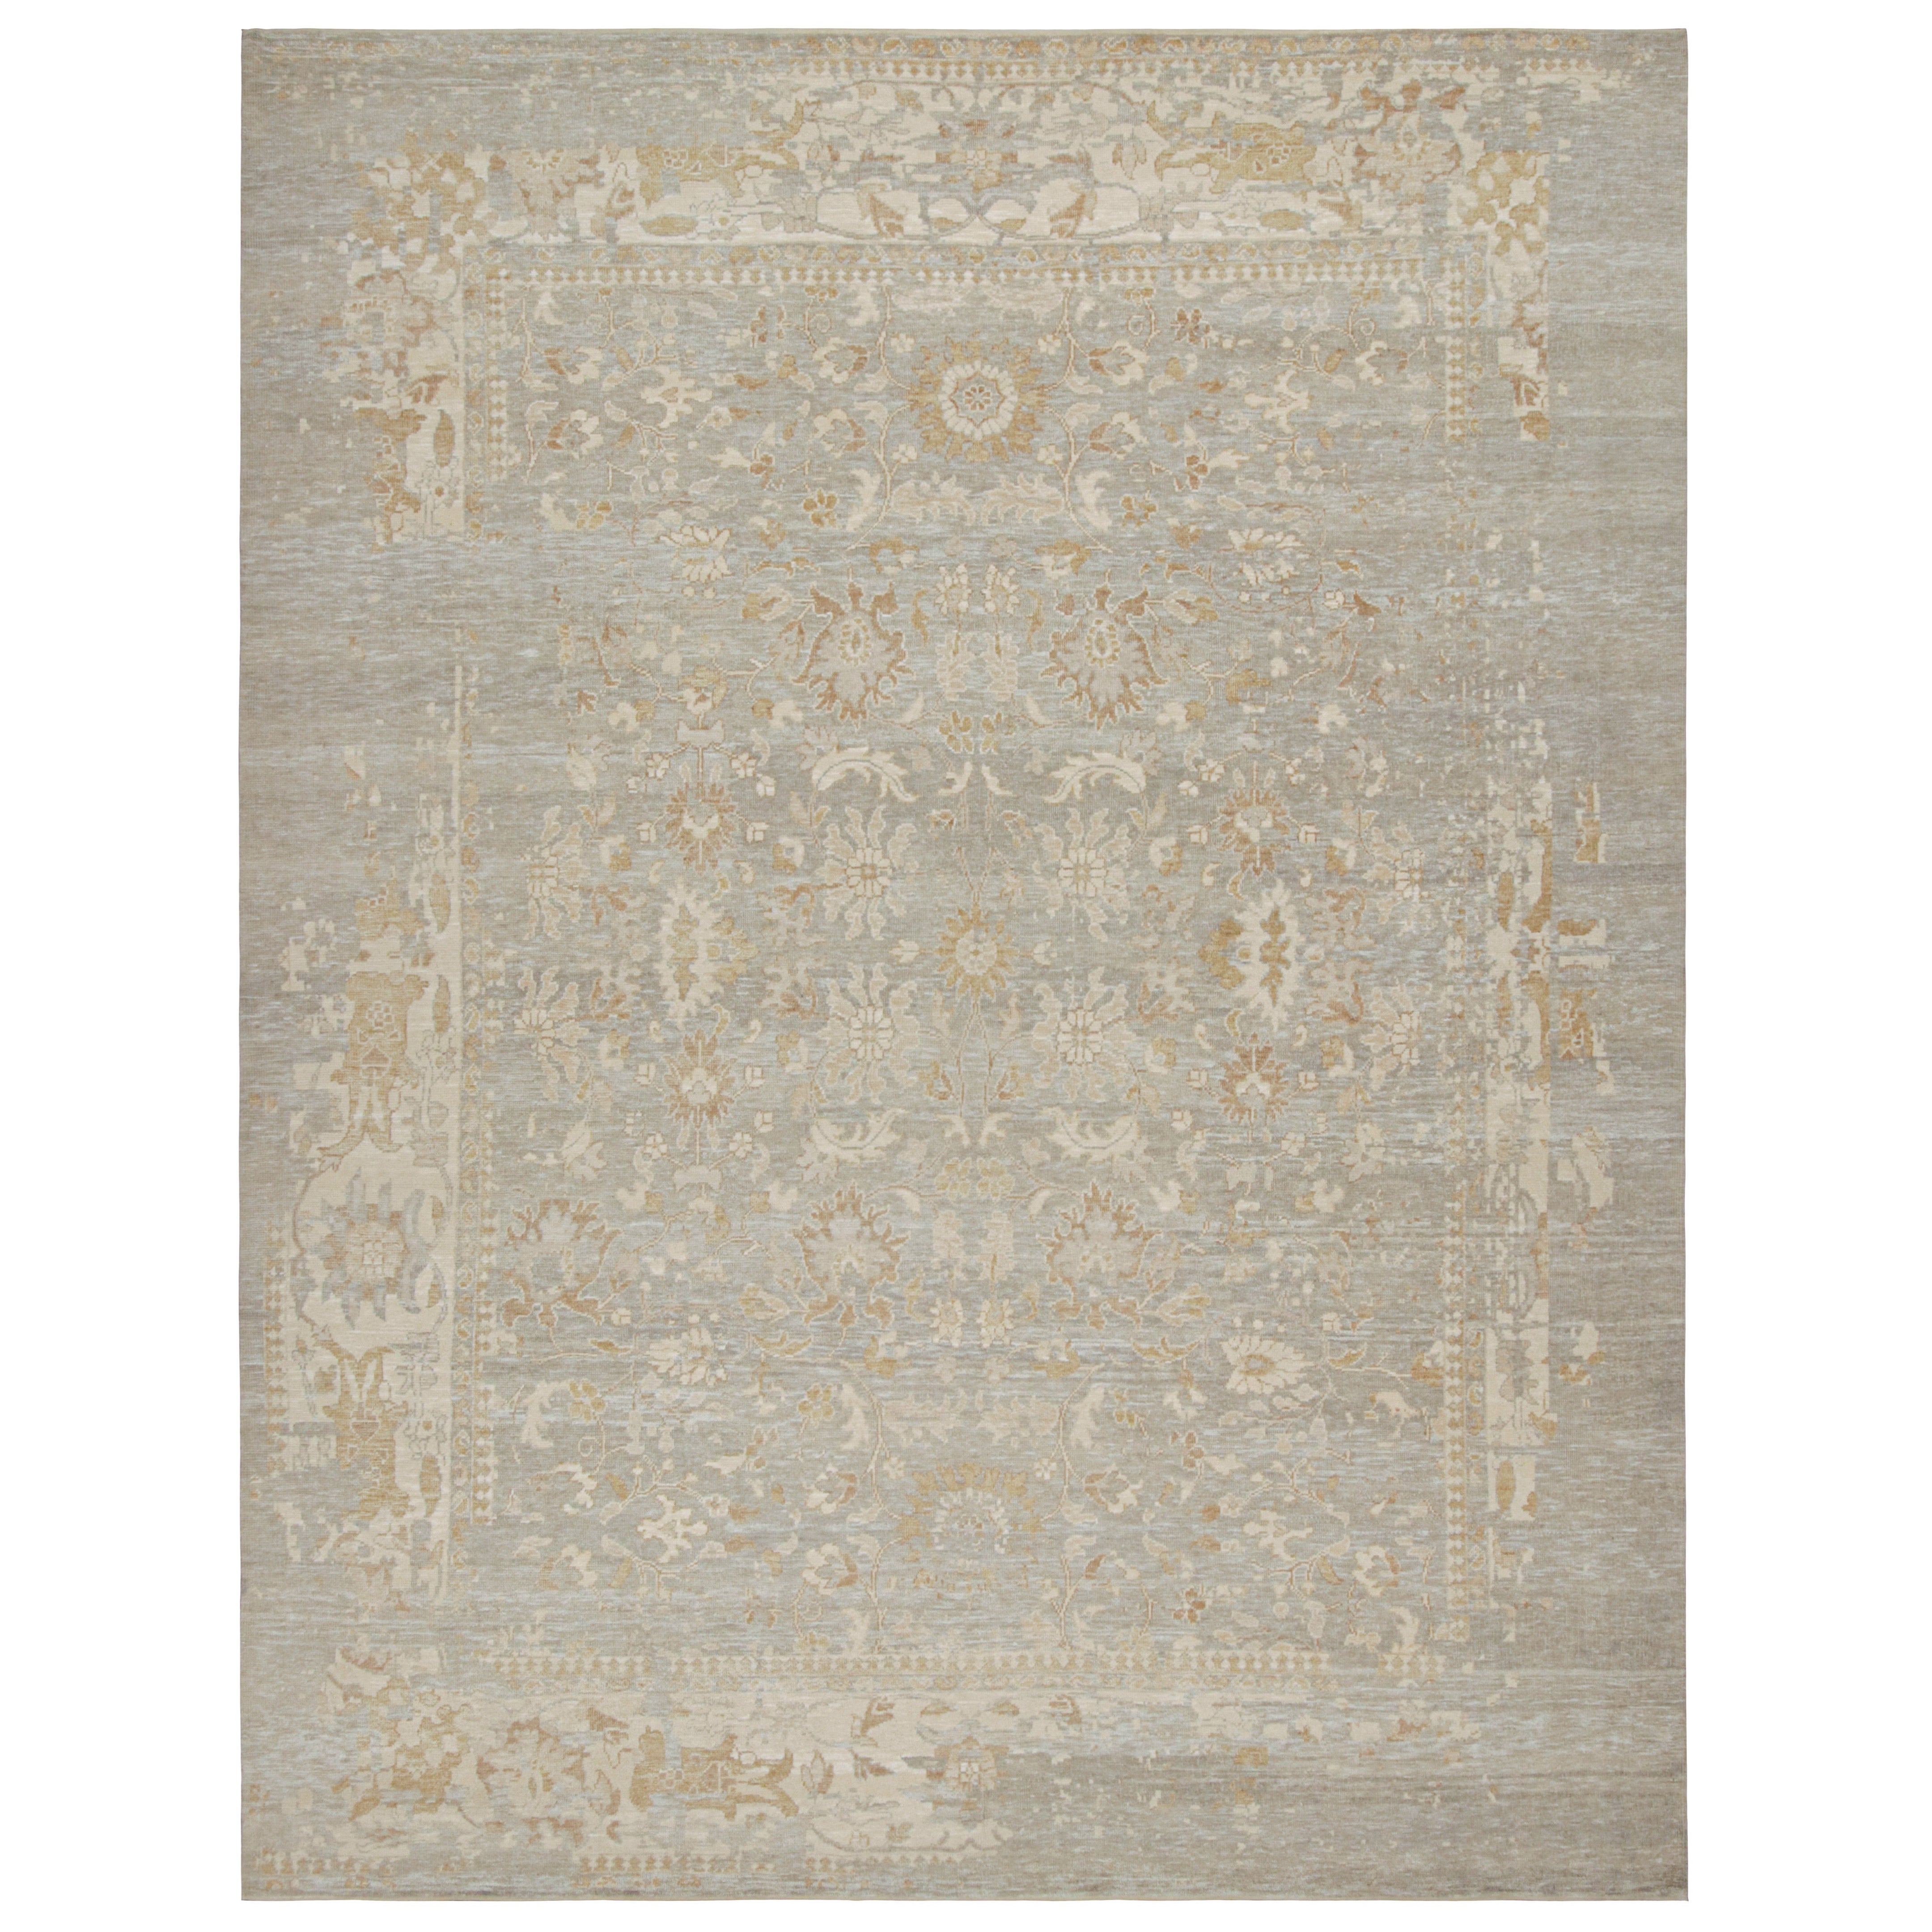 Rug & Kilim’s Oushak style rug in Grey & Beige-Brown Floral Patterns For Sale